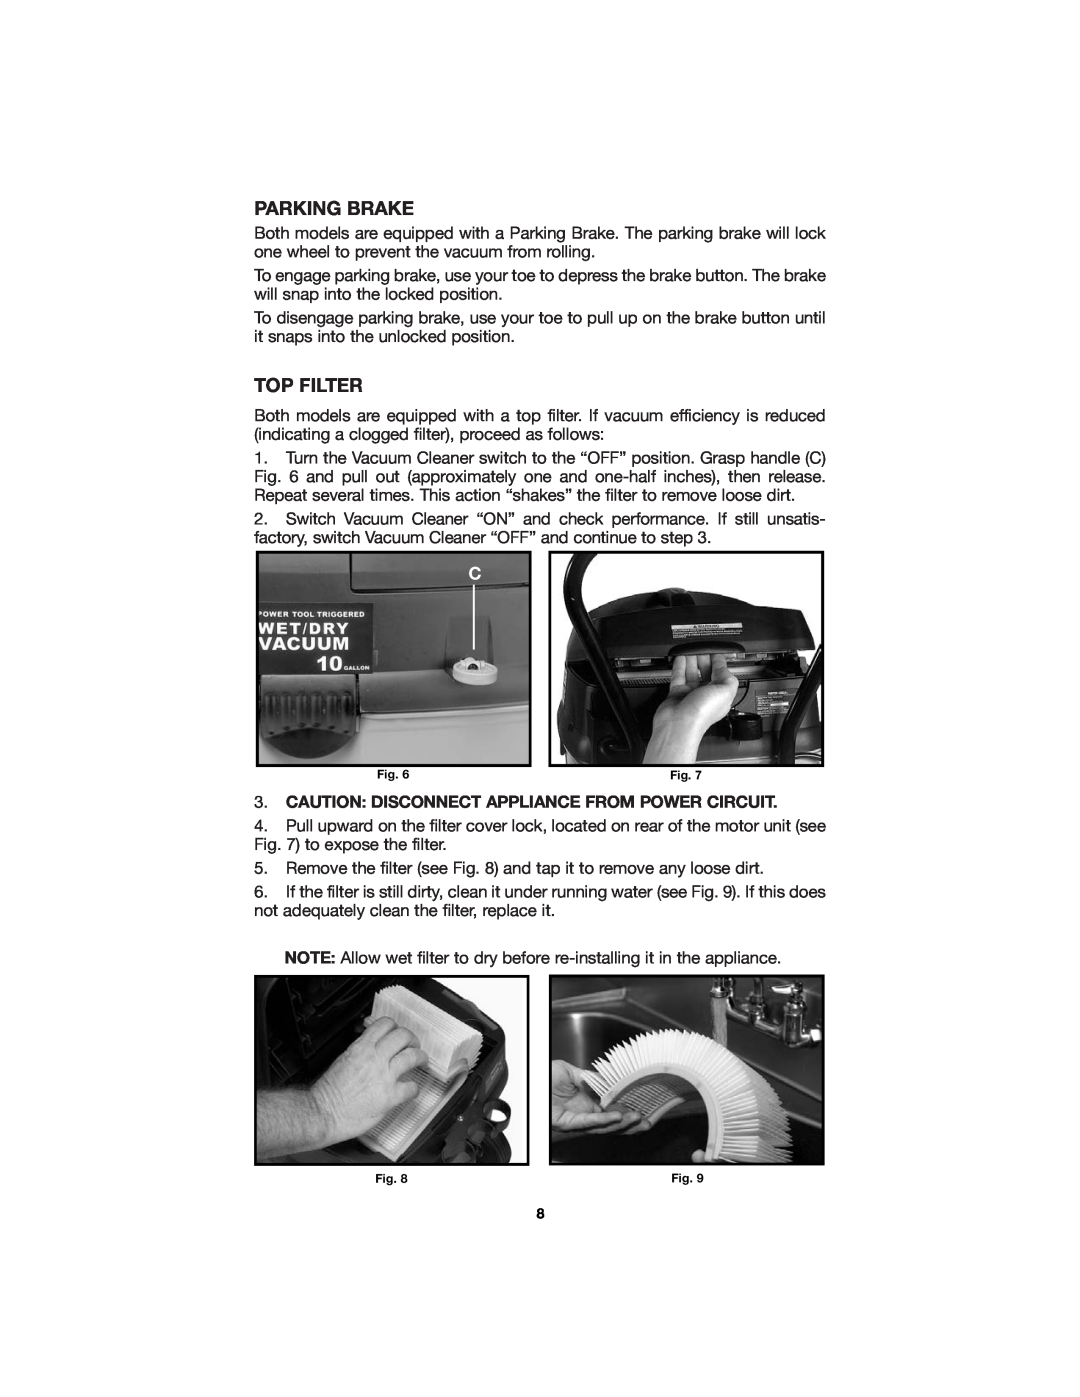 Porter-Cable 7812 instruction manual Parking Brake, Top Filter 